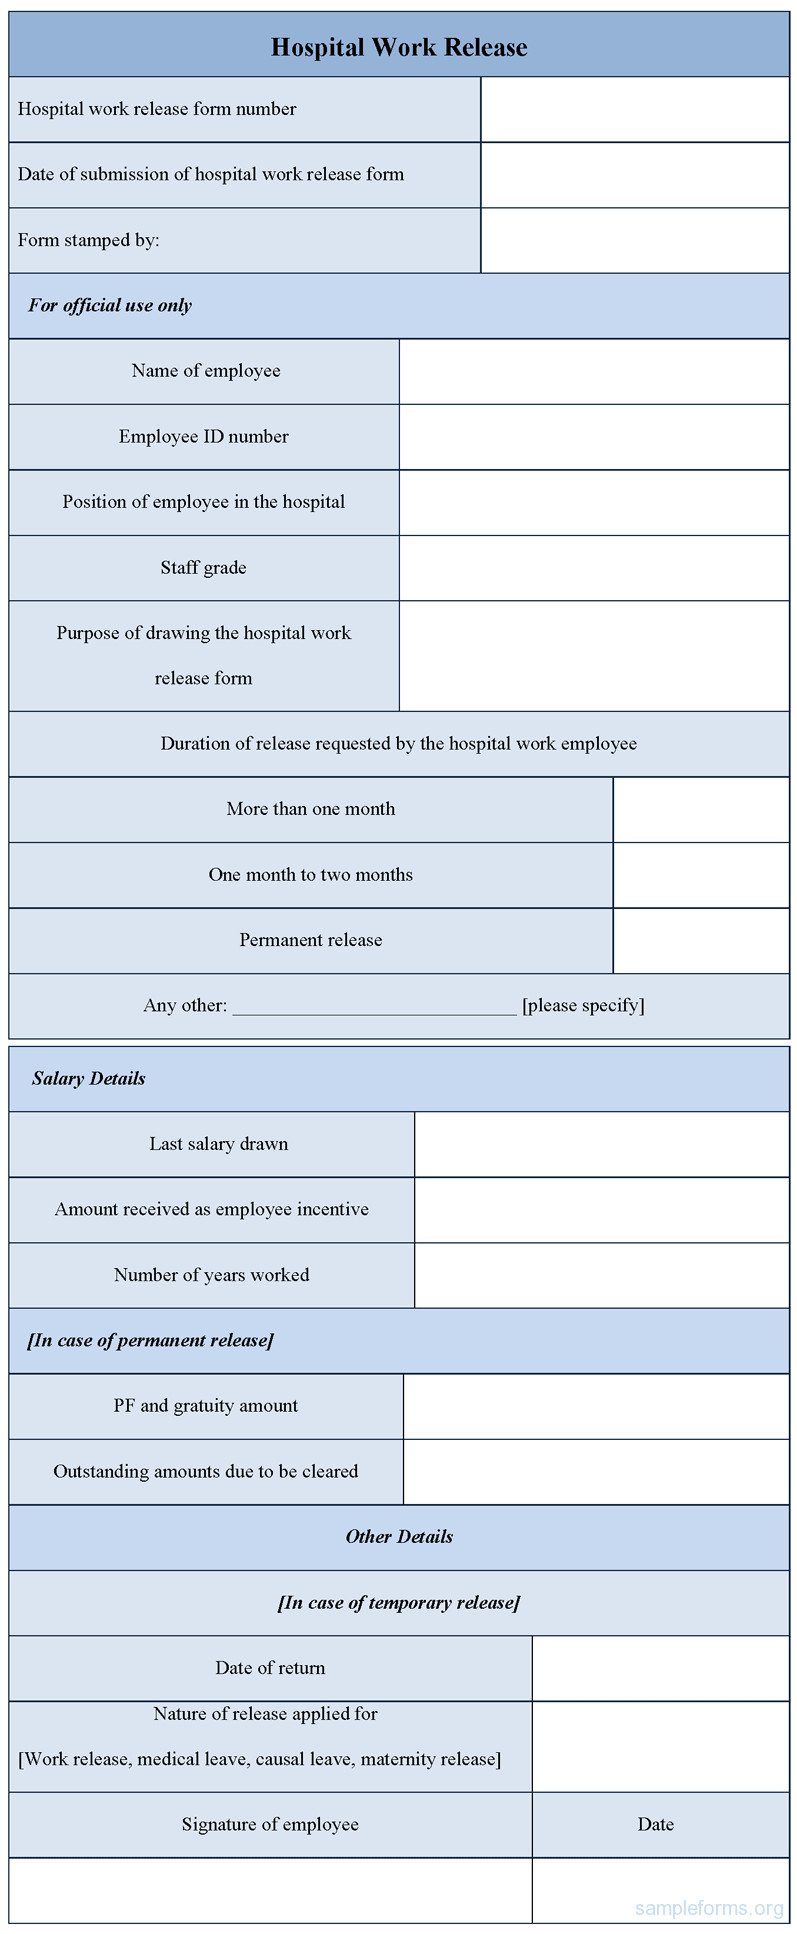 Hospital Work Release Form Sample Forms